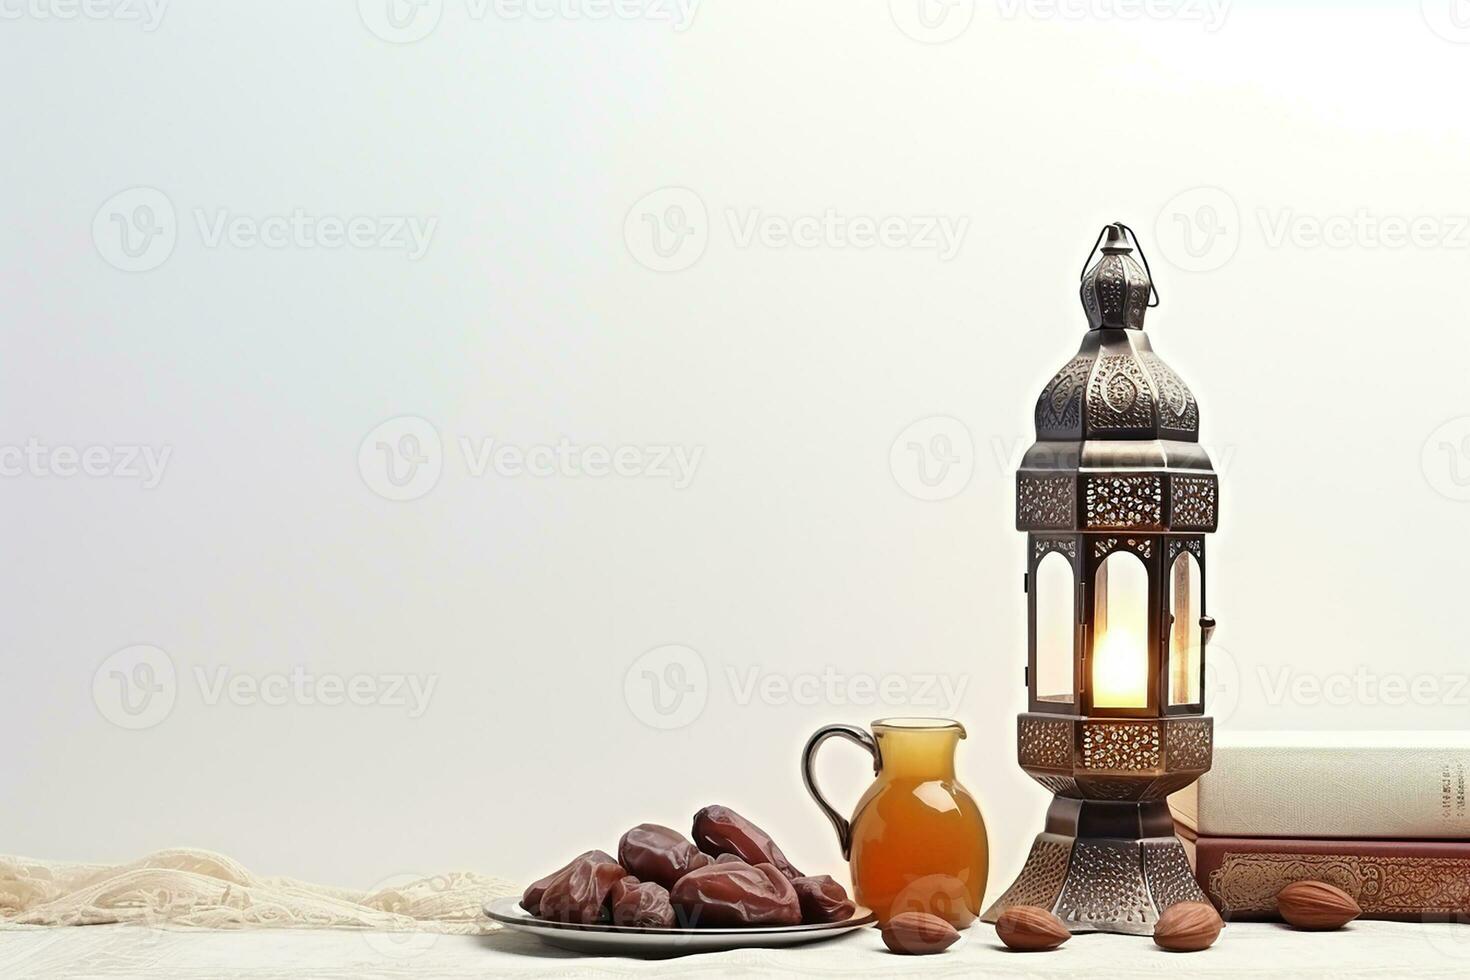 ai gegenereerd sier- Arabisch lantaarn gloeiend voor moslim heilig maand Ramadan kareem foto